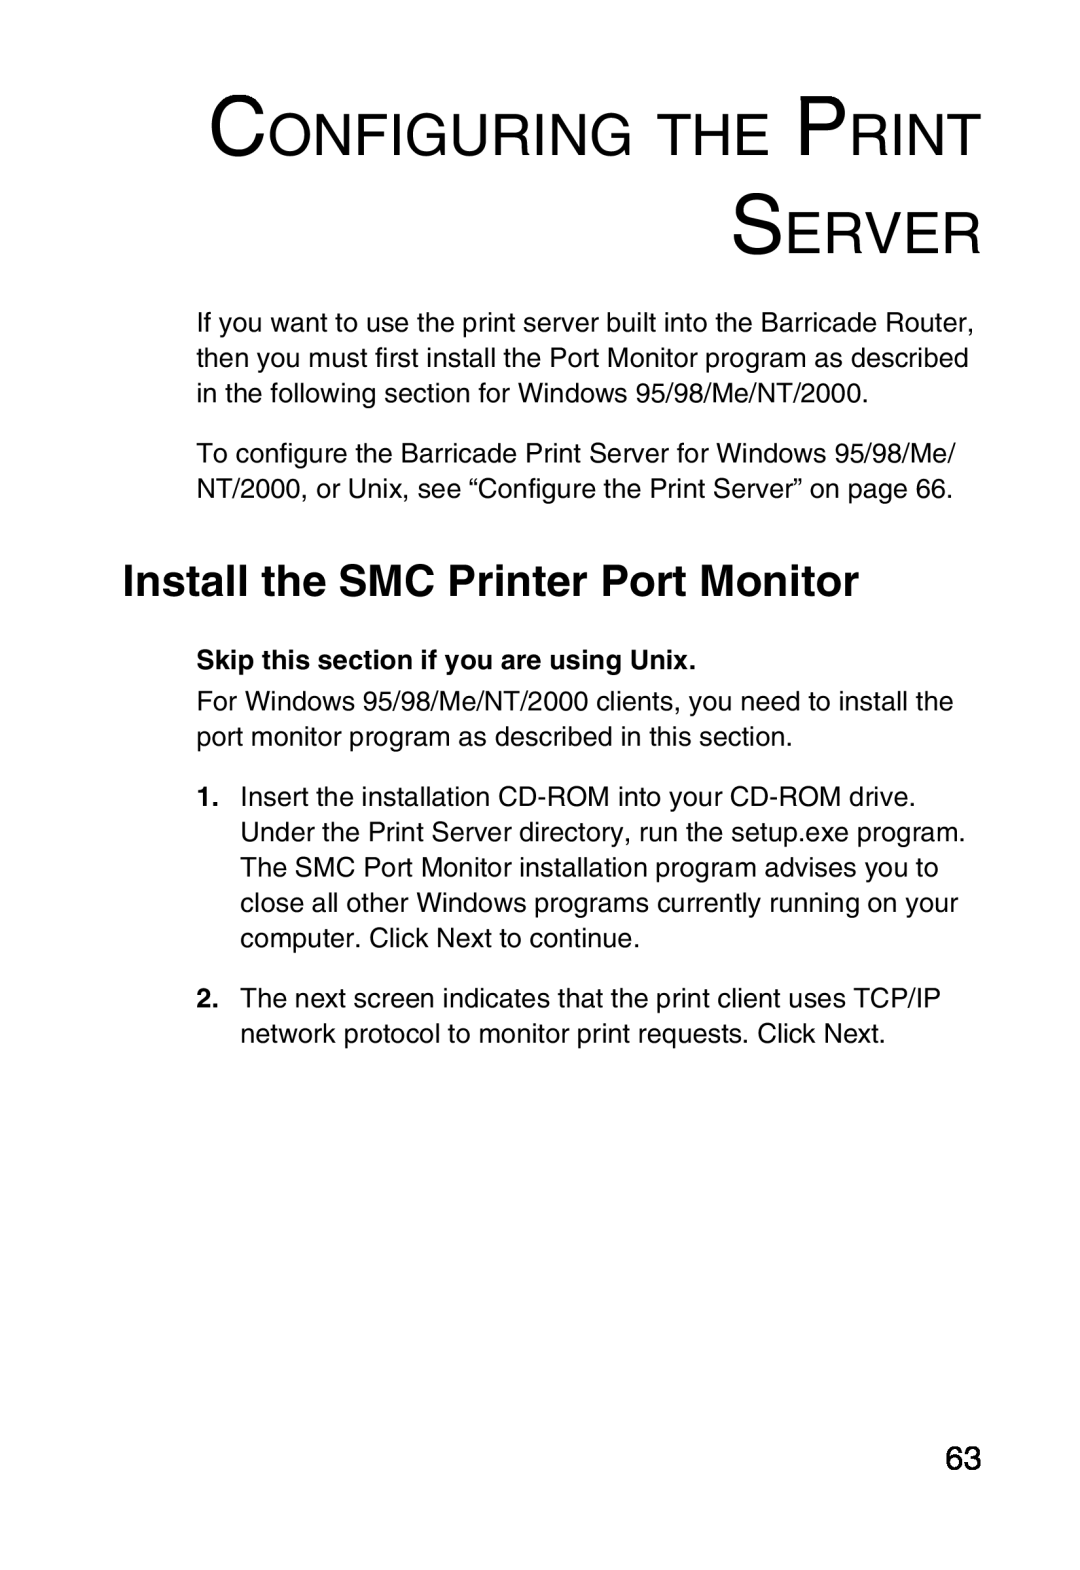 Sharp S M C 7 0 0 4 A B R, SMC7004ABR manual Configuring The Print Server, Install the SMC Printer Port Monitor 